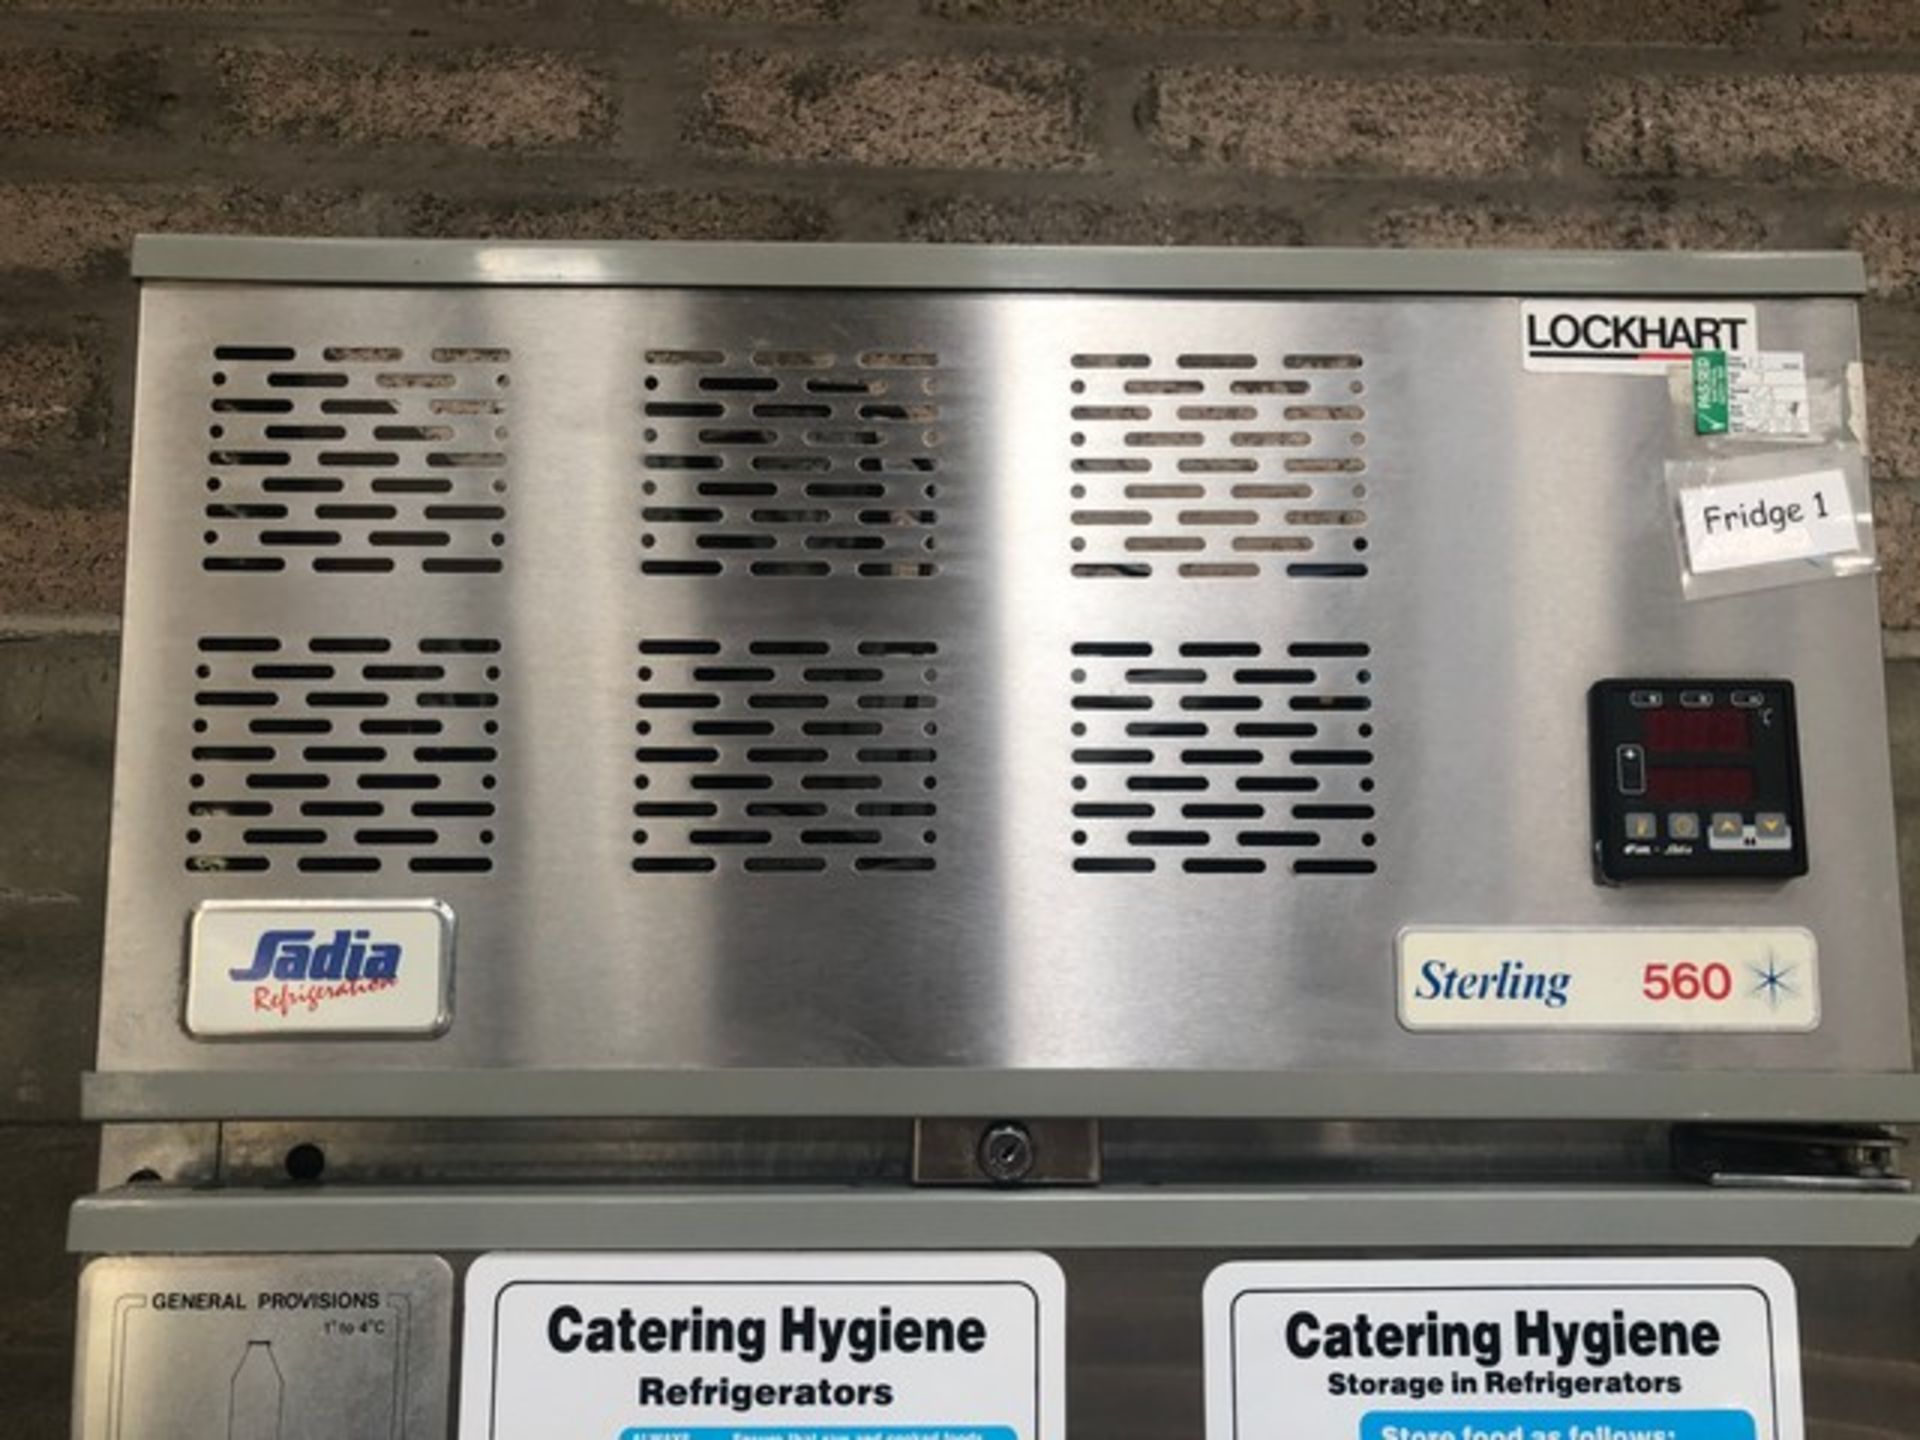 Sterling 560 fridge - Image 3 of 3